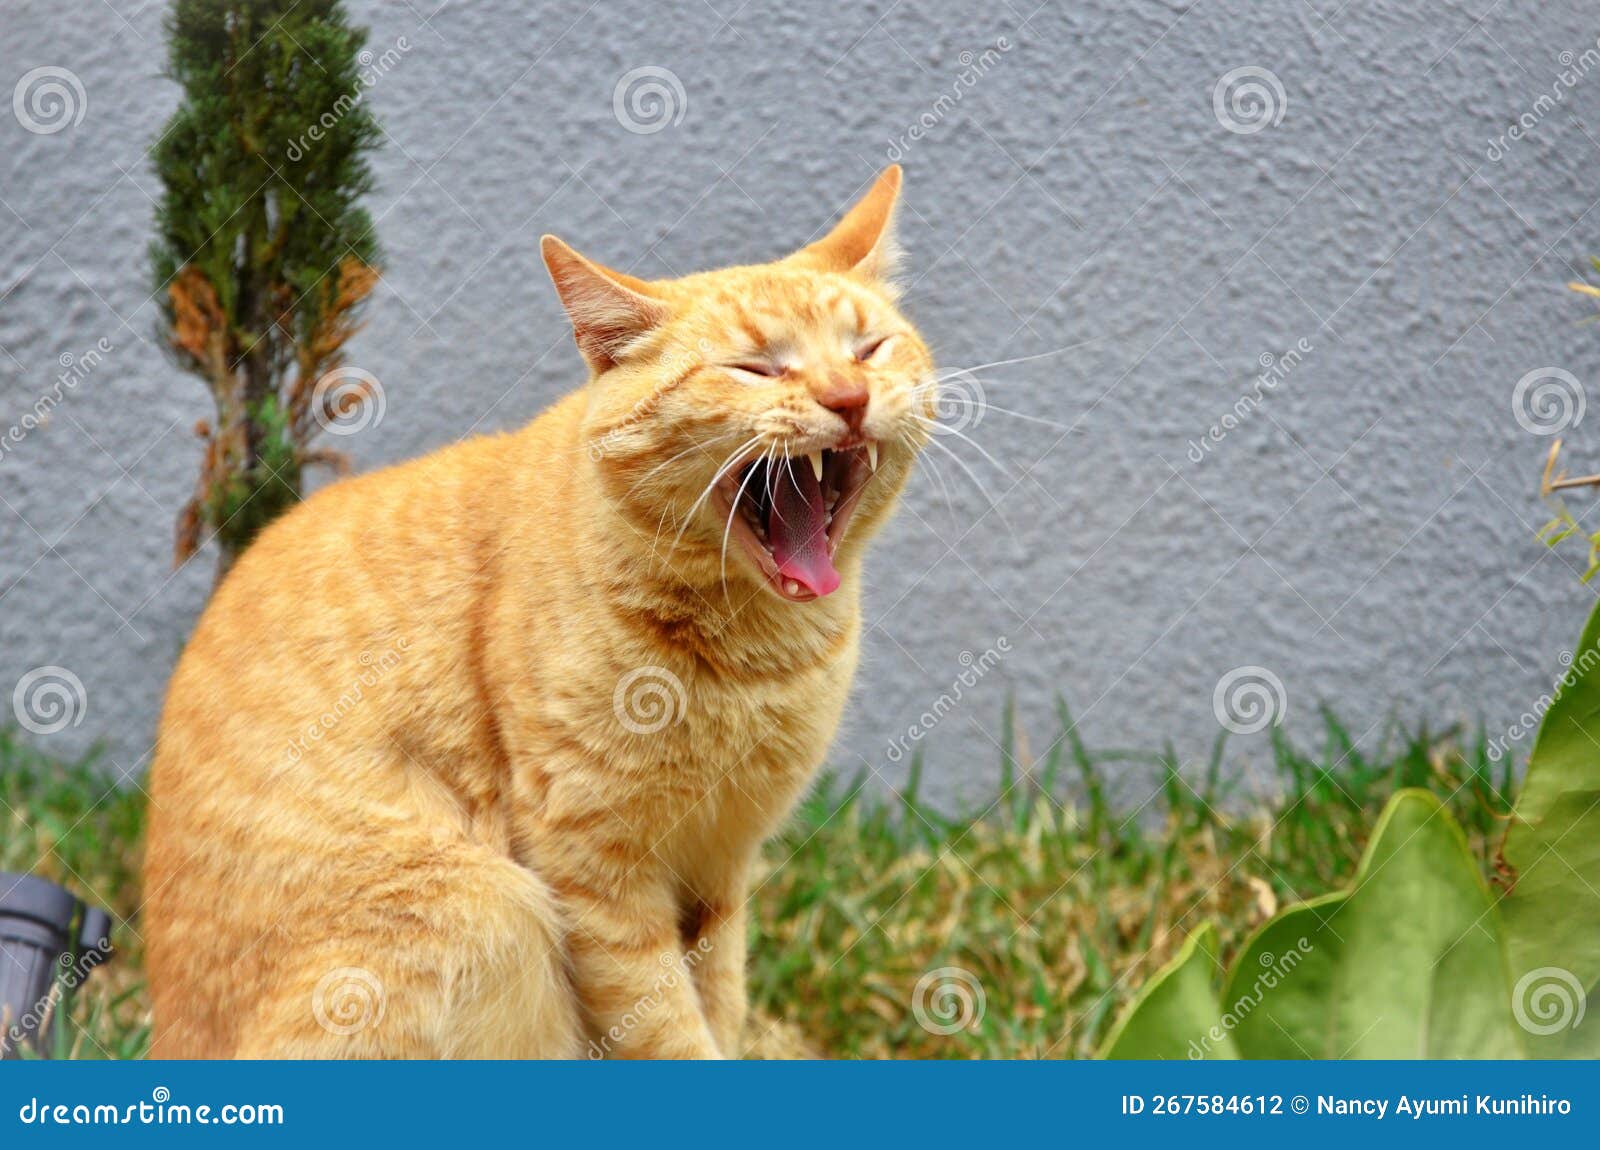 a sleepy orange felis catus cat